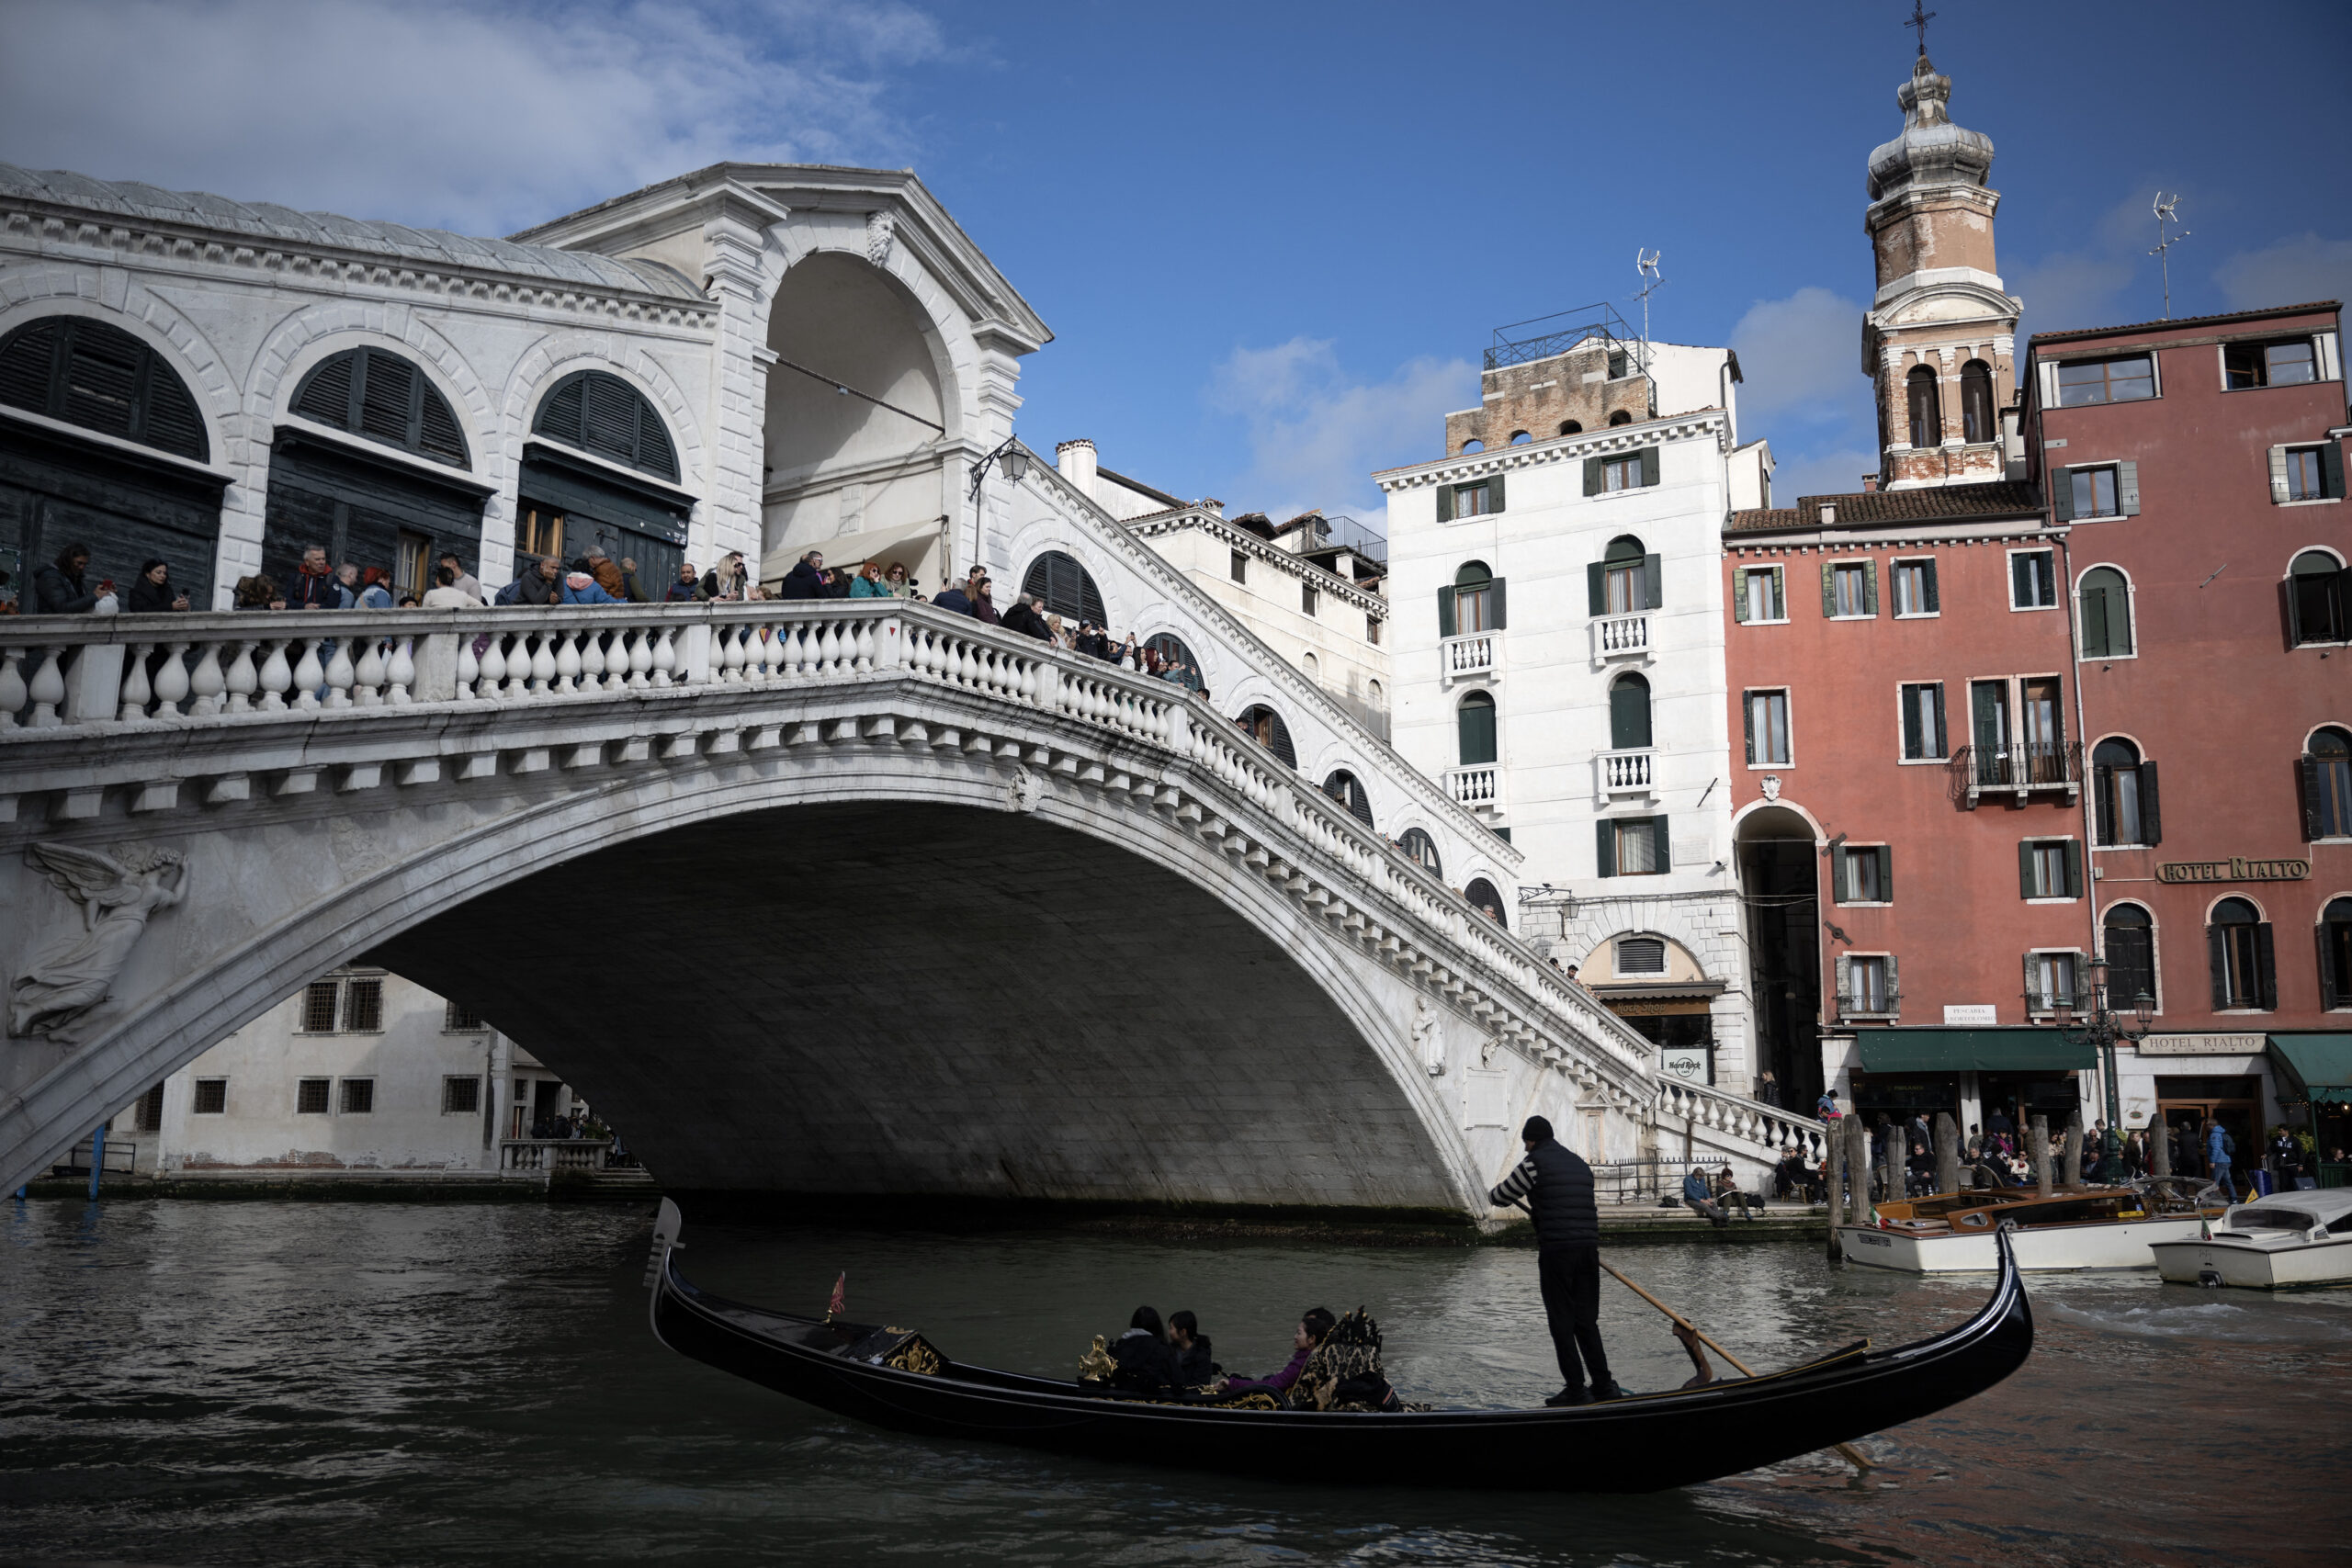 Battling mass tourism, Venice introduces day tickets